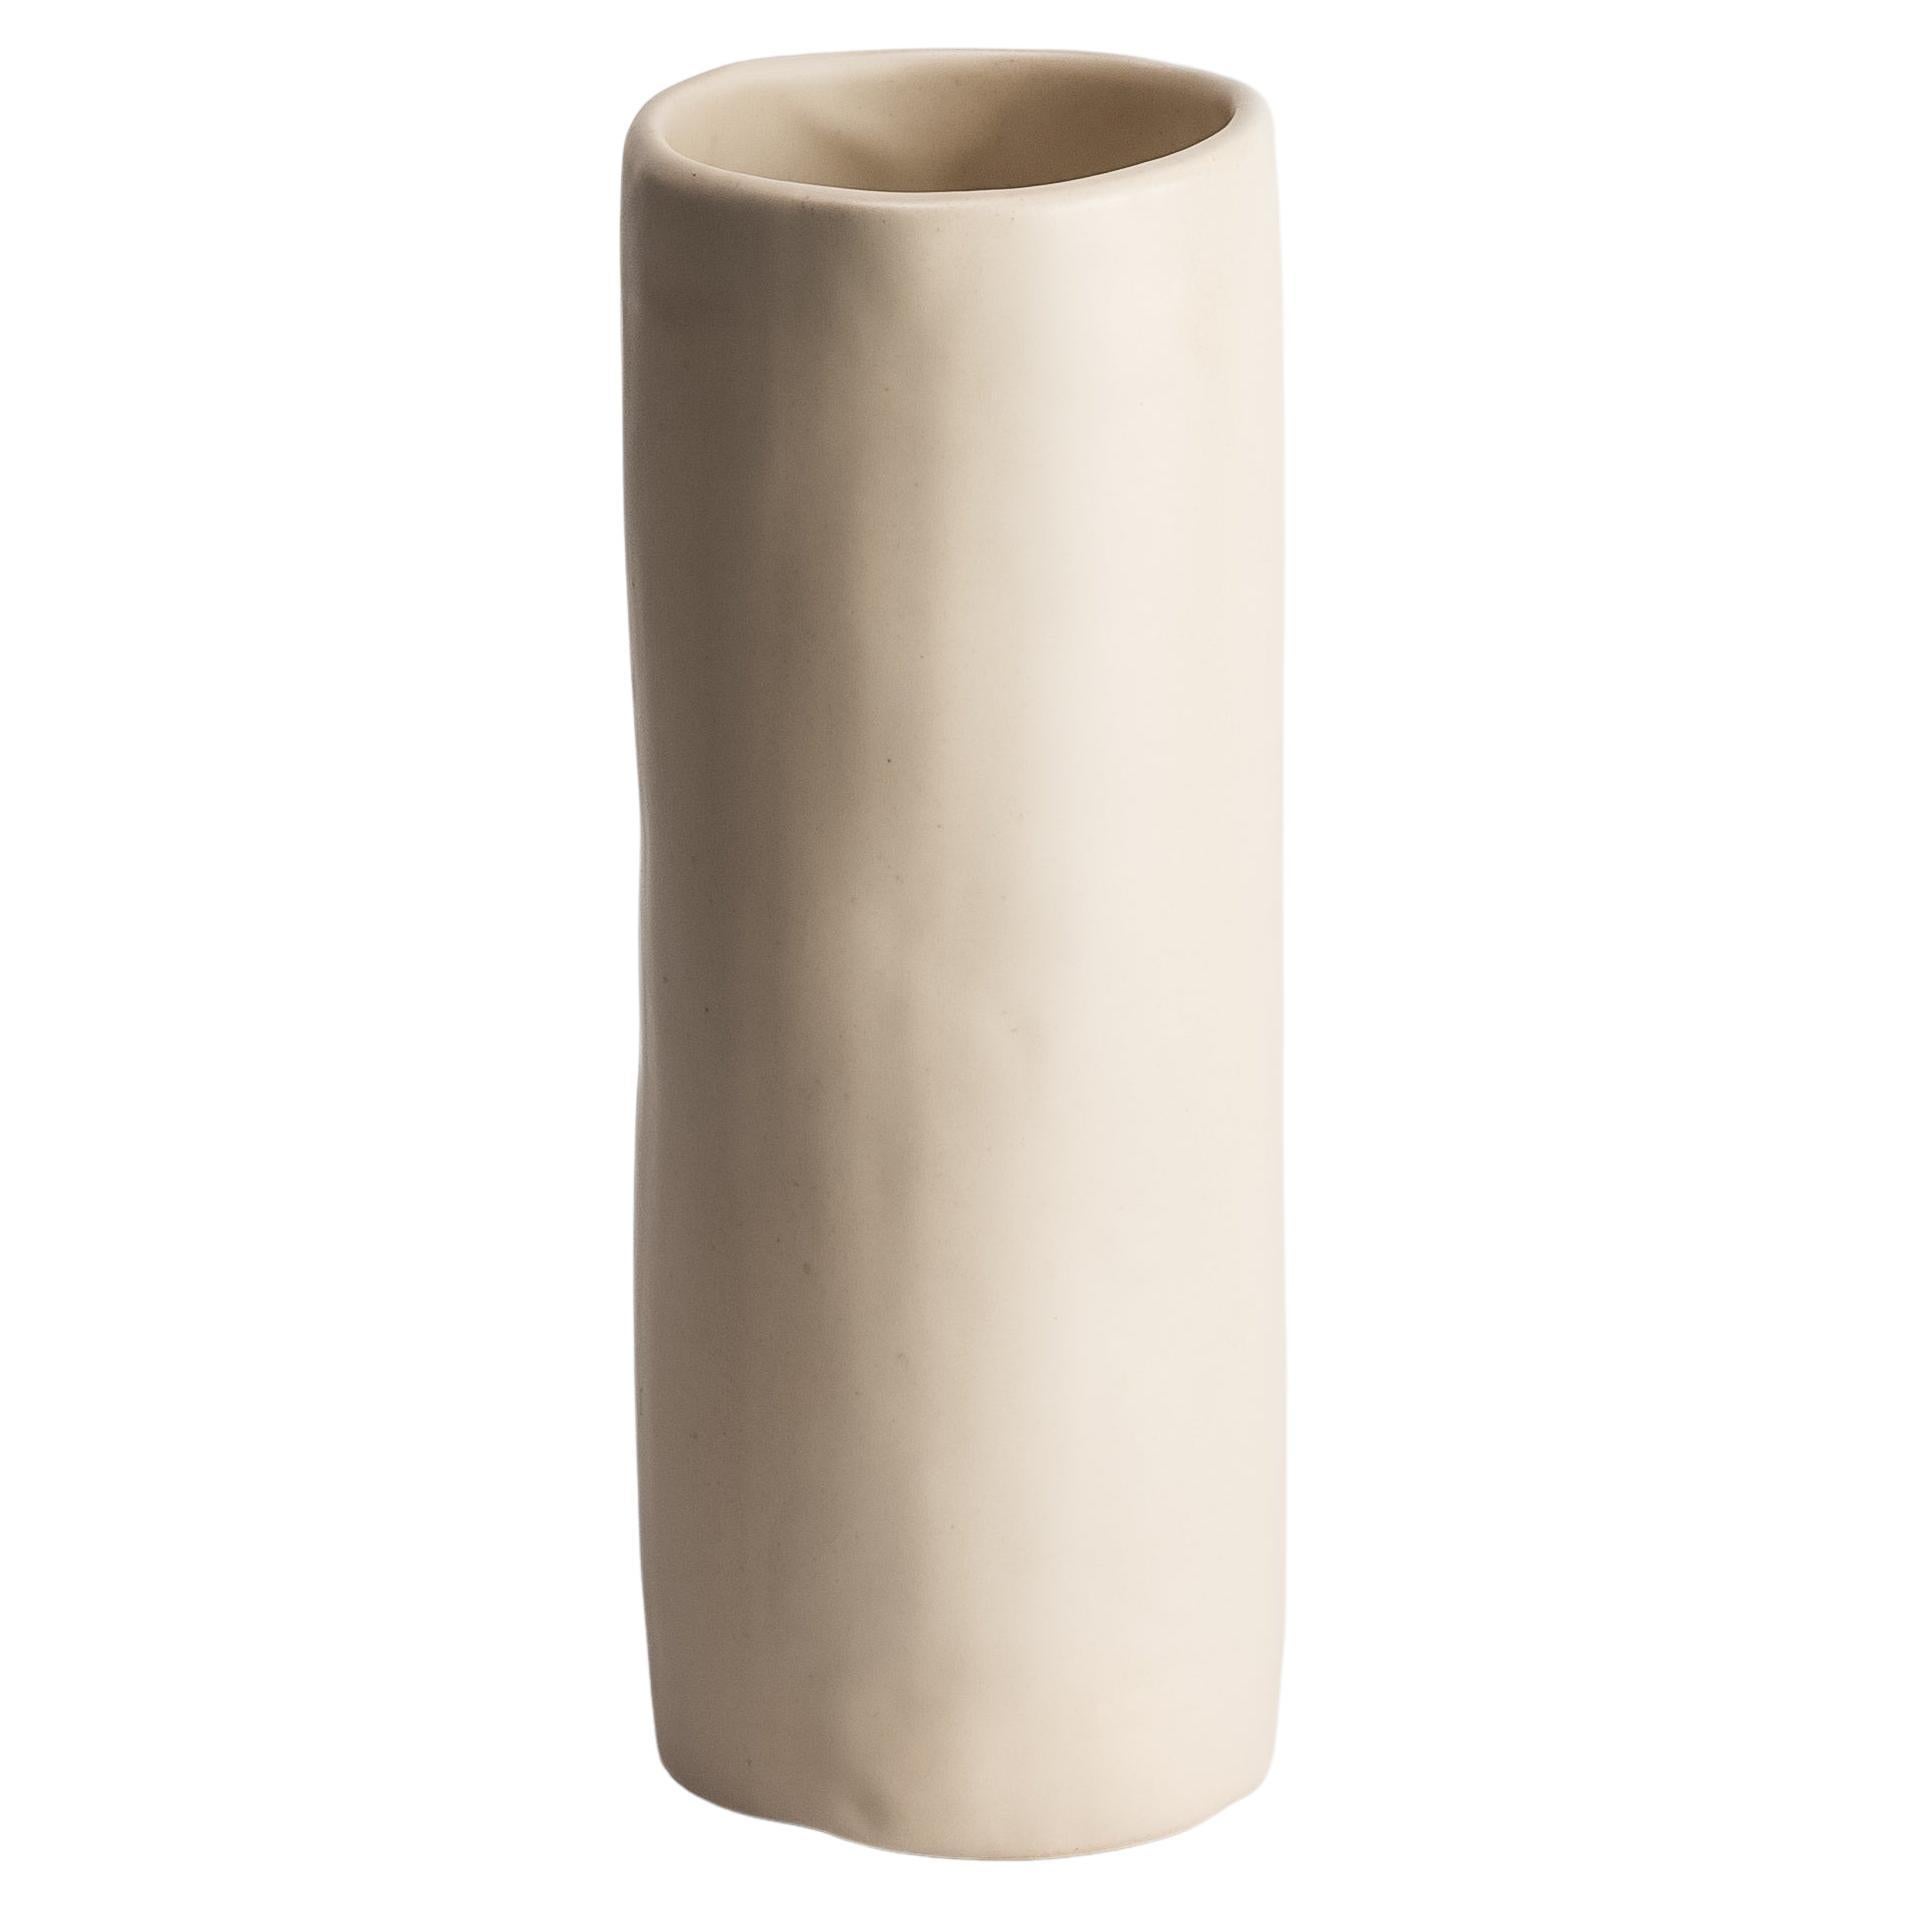 Handame Ceramic Beige Neutral Flower Vase Organic Shape For Sale